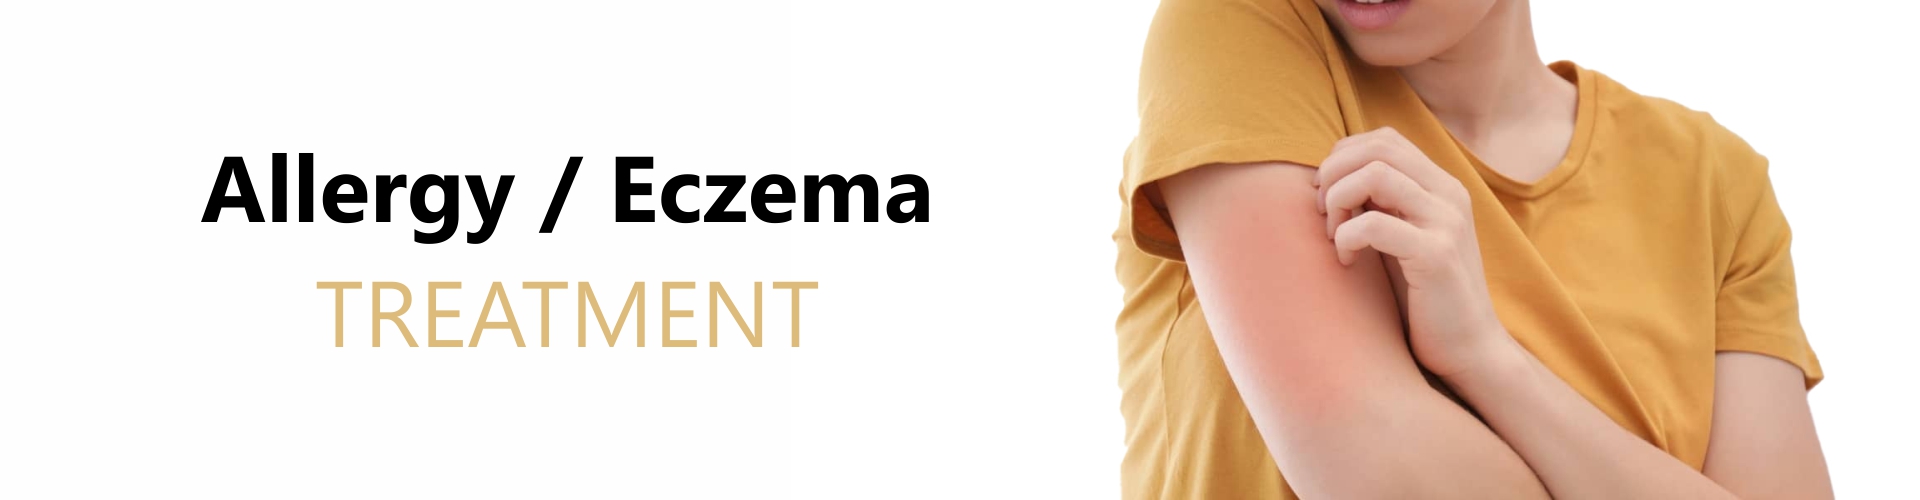 Allergy Eczema Treatment